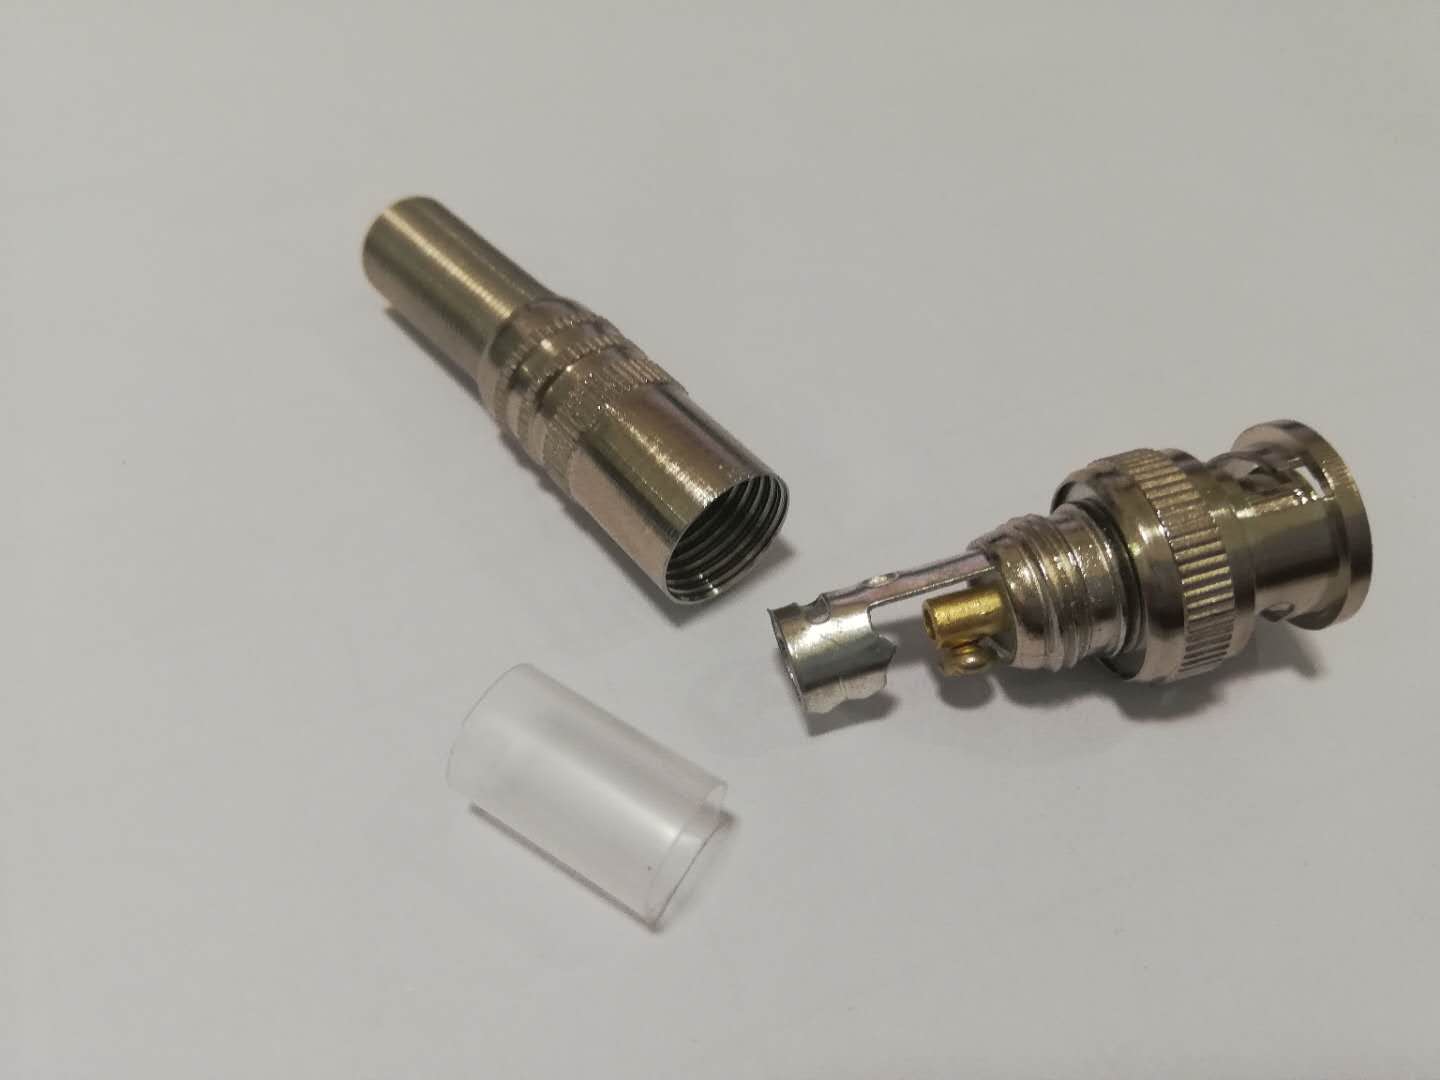 BNC solderless connector